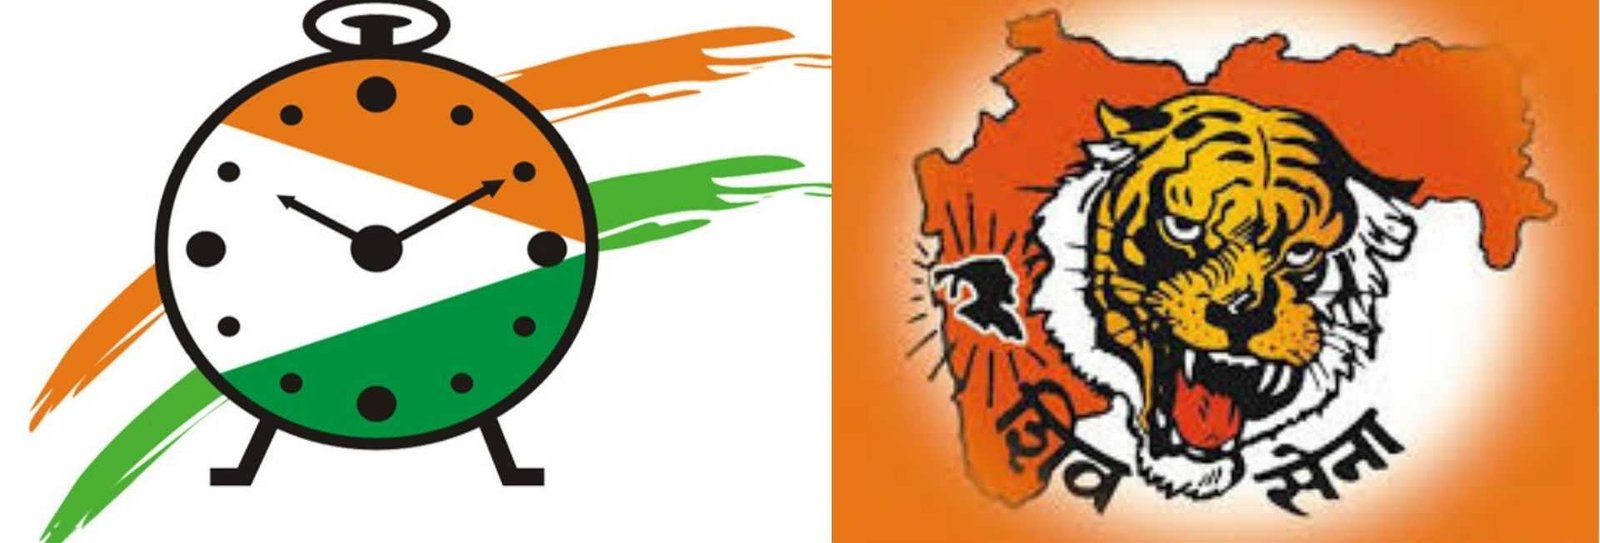 मनोहर नाईक | NCP's Manohar Naik on the path of Chiranjeev Shiv Sena?